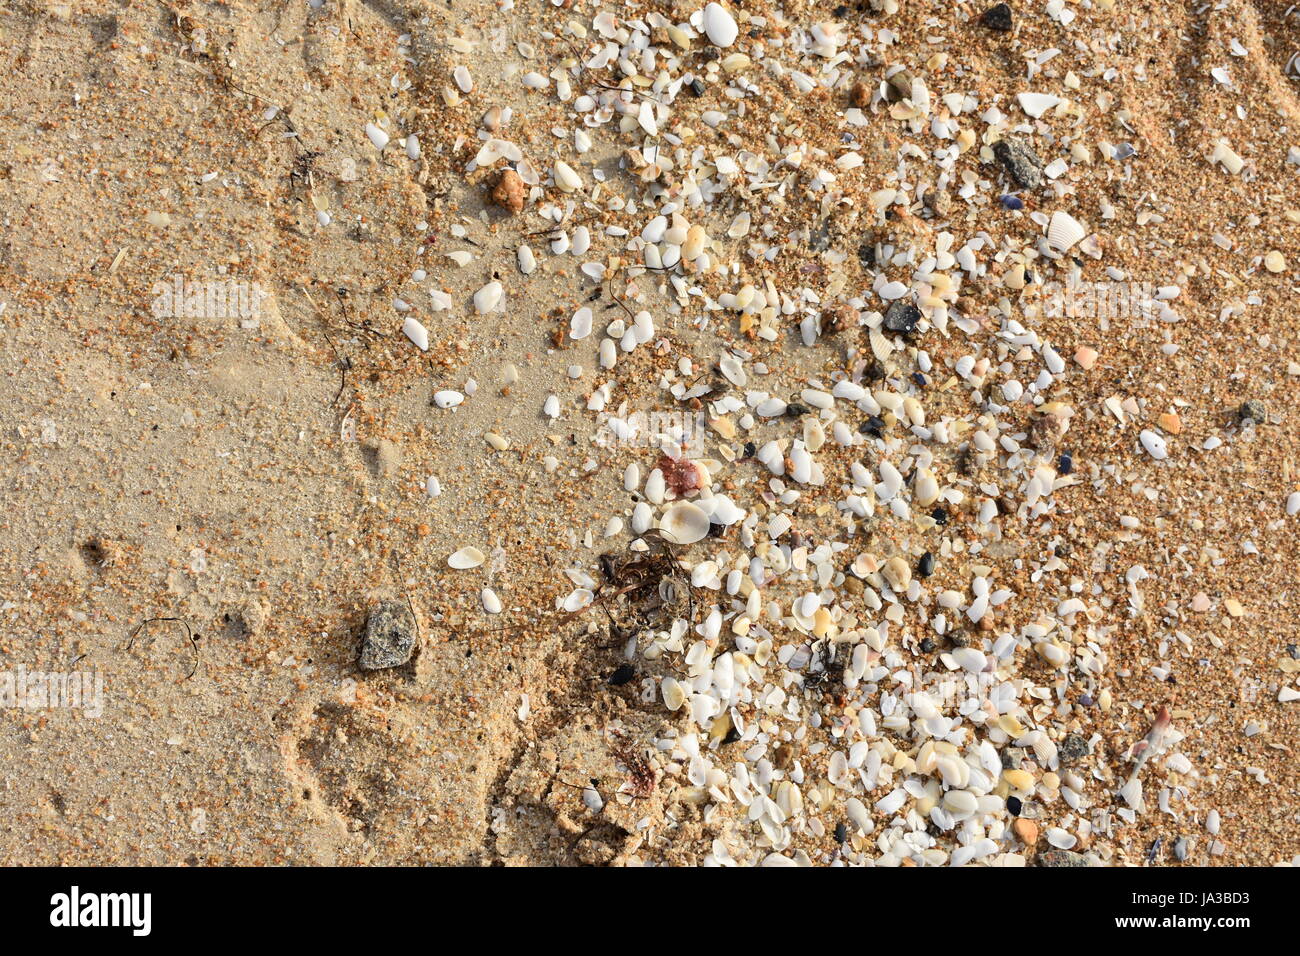 shells on the beach Stock Photo